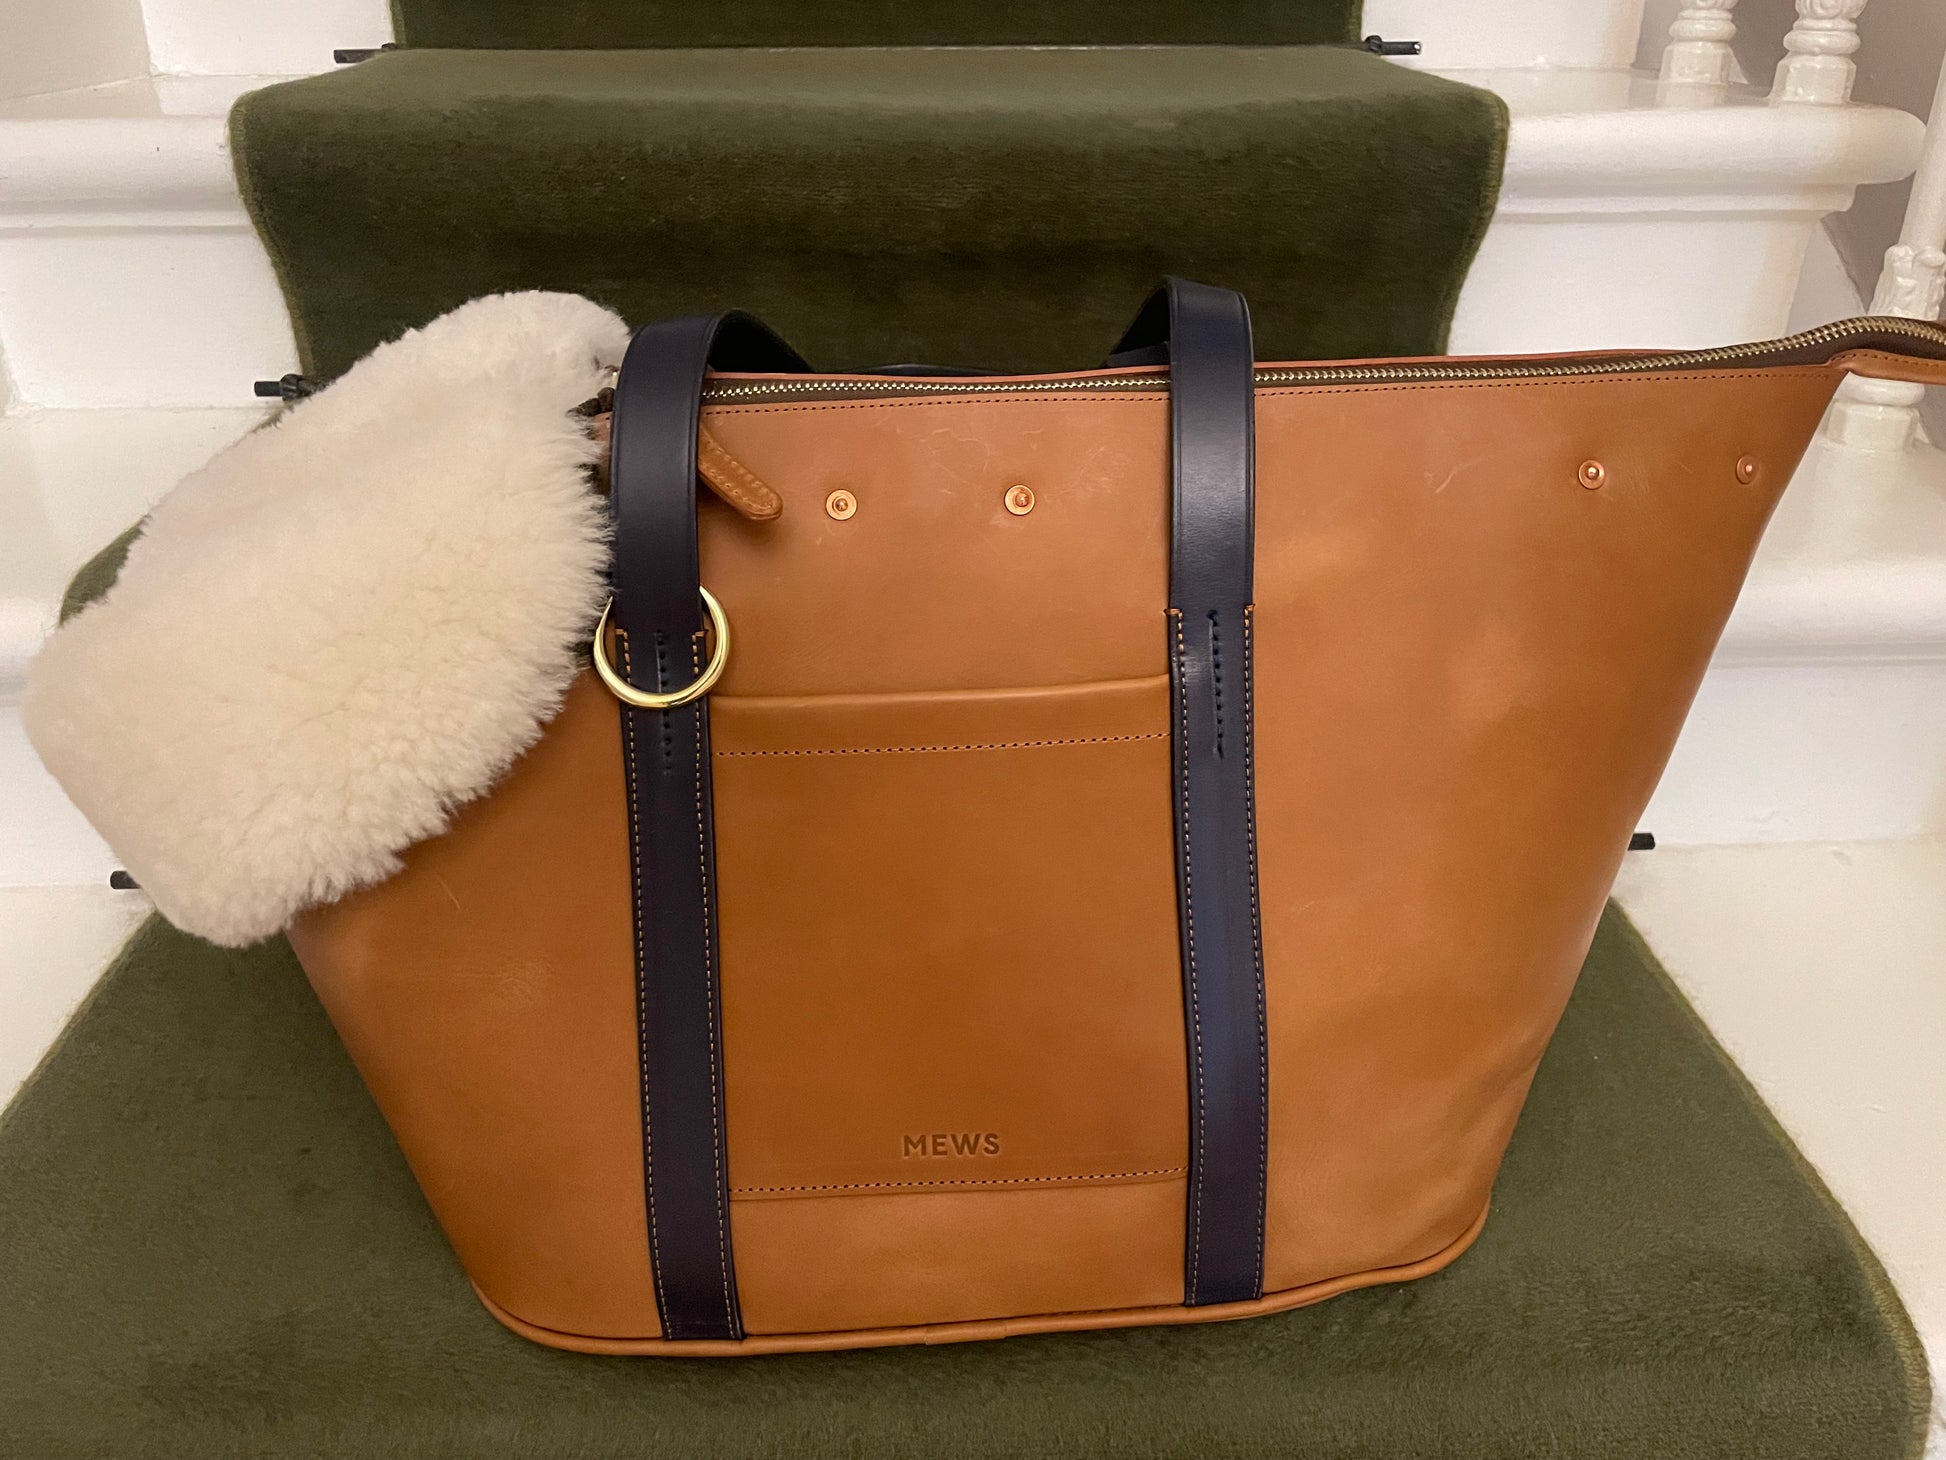 MEWS London Leather Wilton Dog Bag